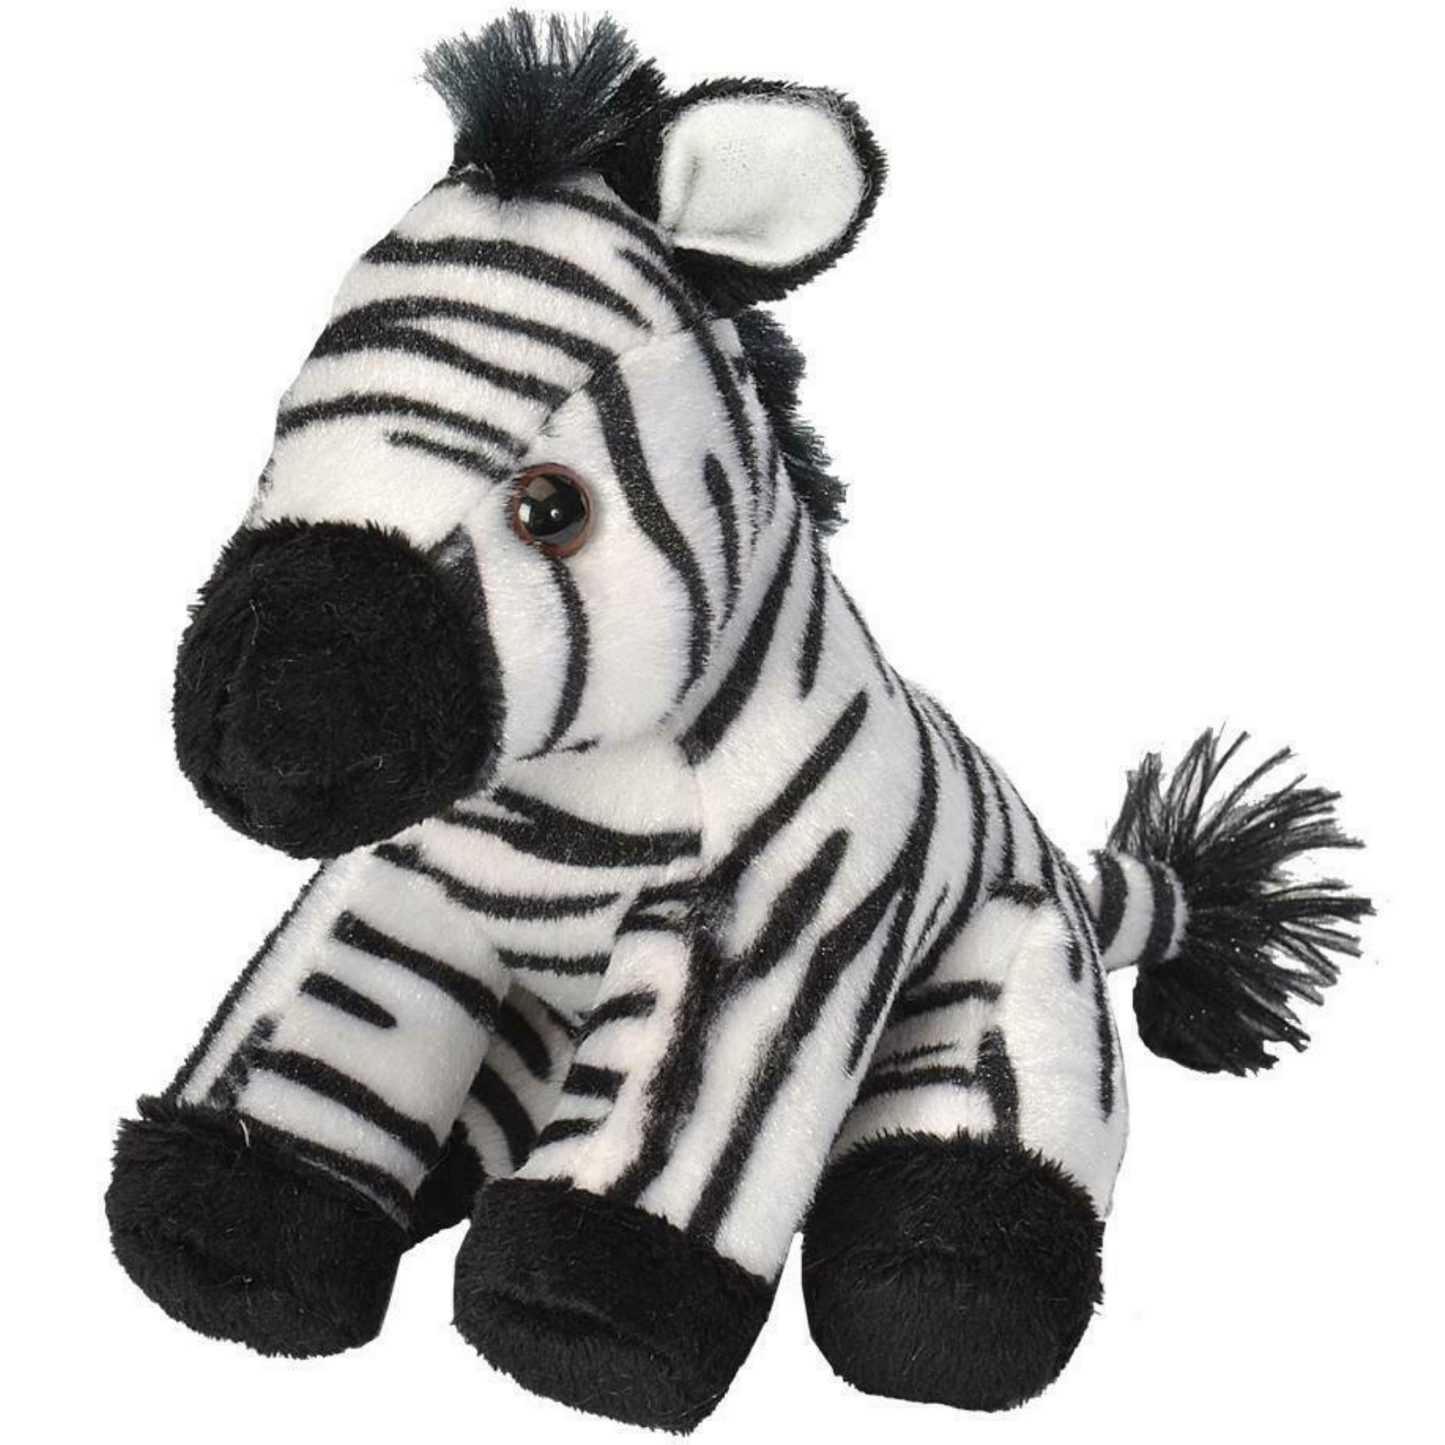 Pocketkins Zebra